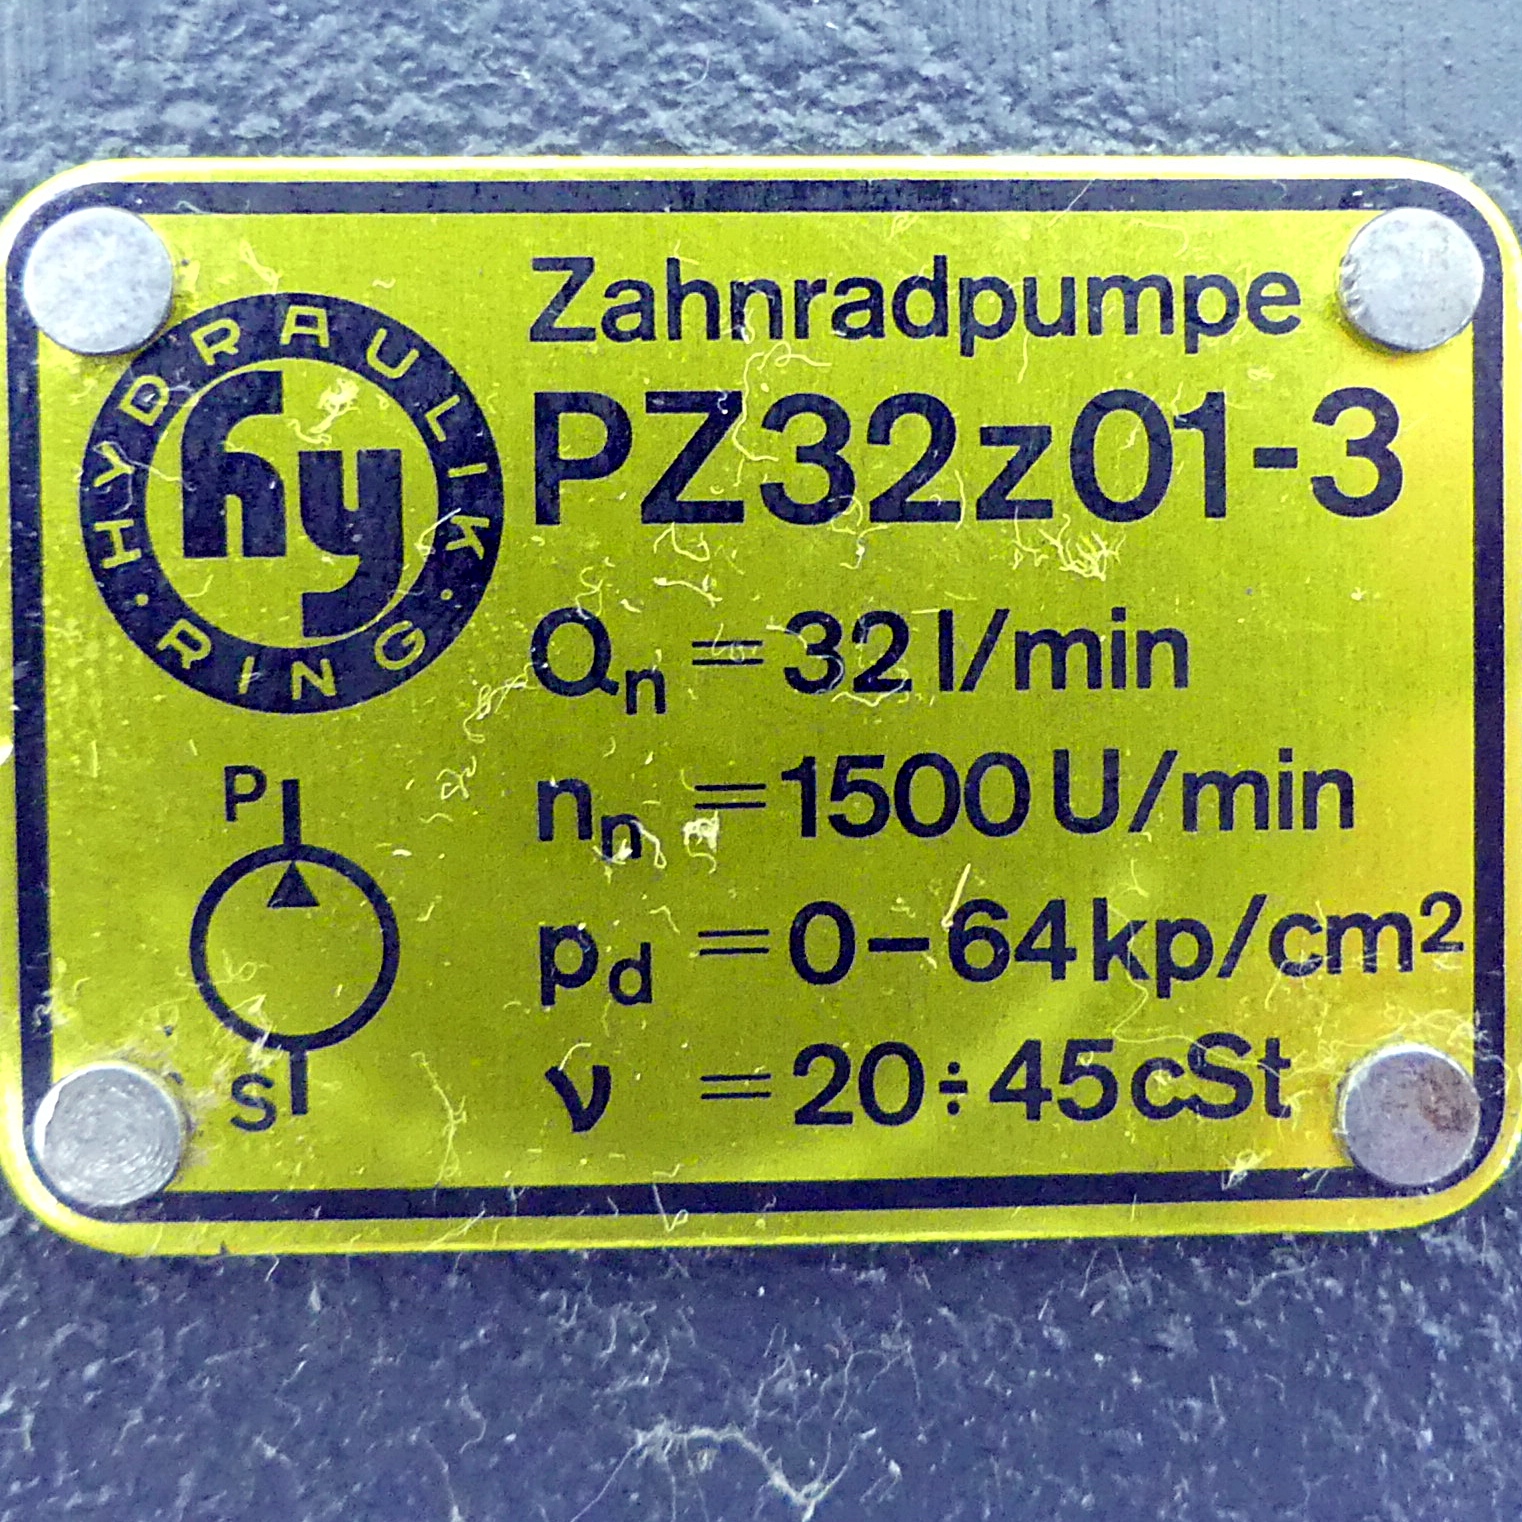 Zahnradpumpe PZ32z01-3 